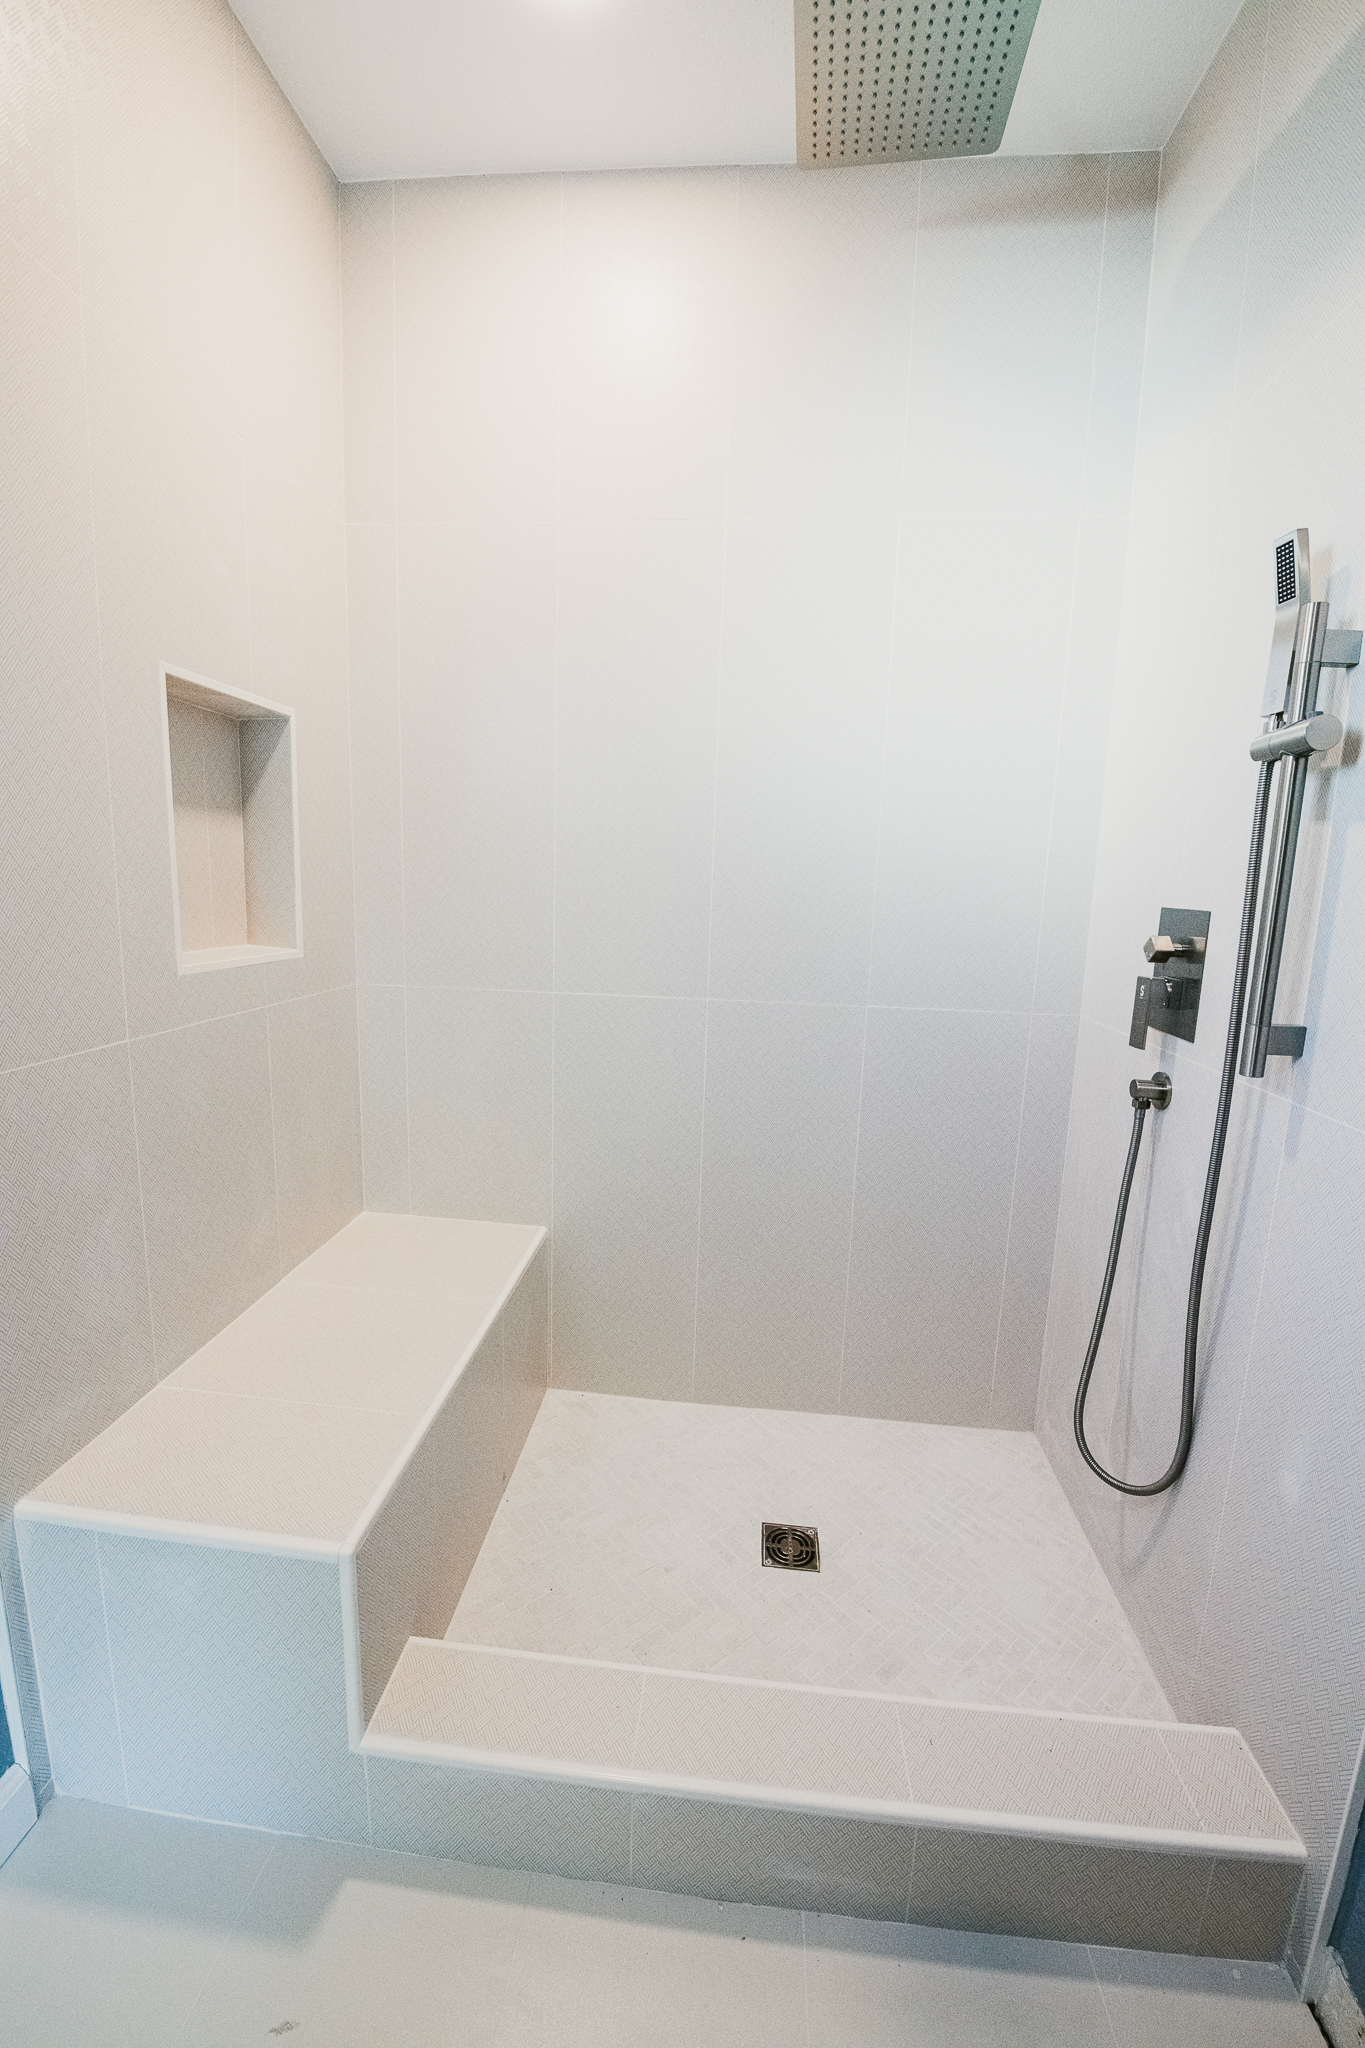 waterproofing your bathroom - Imagine Unique